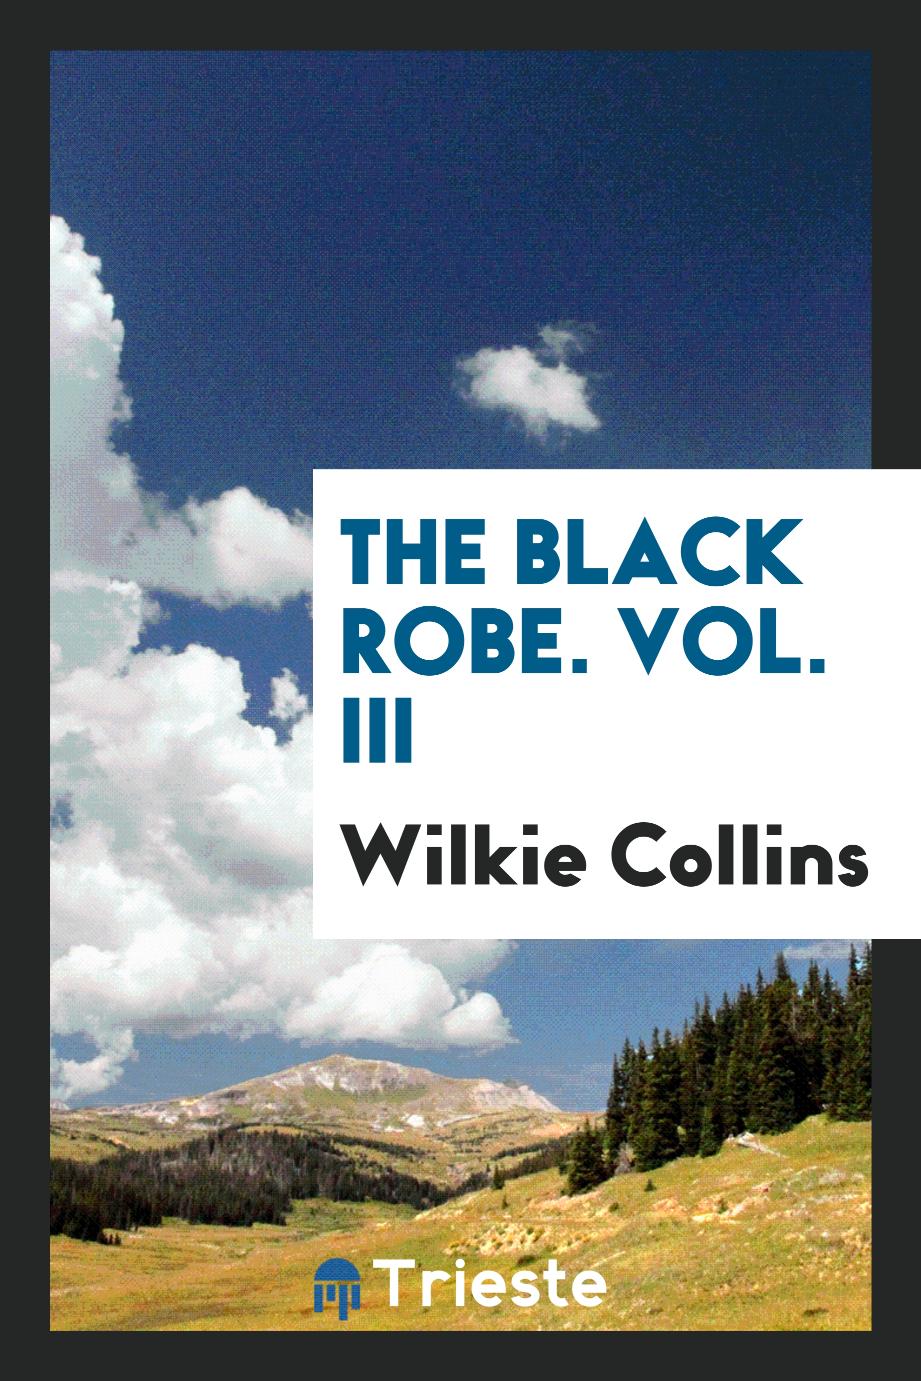 The black robe. Vol. III